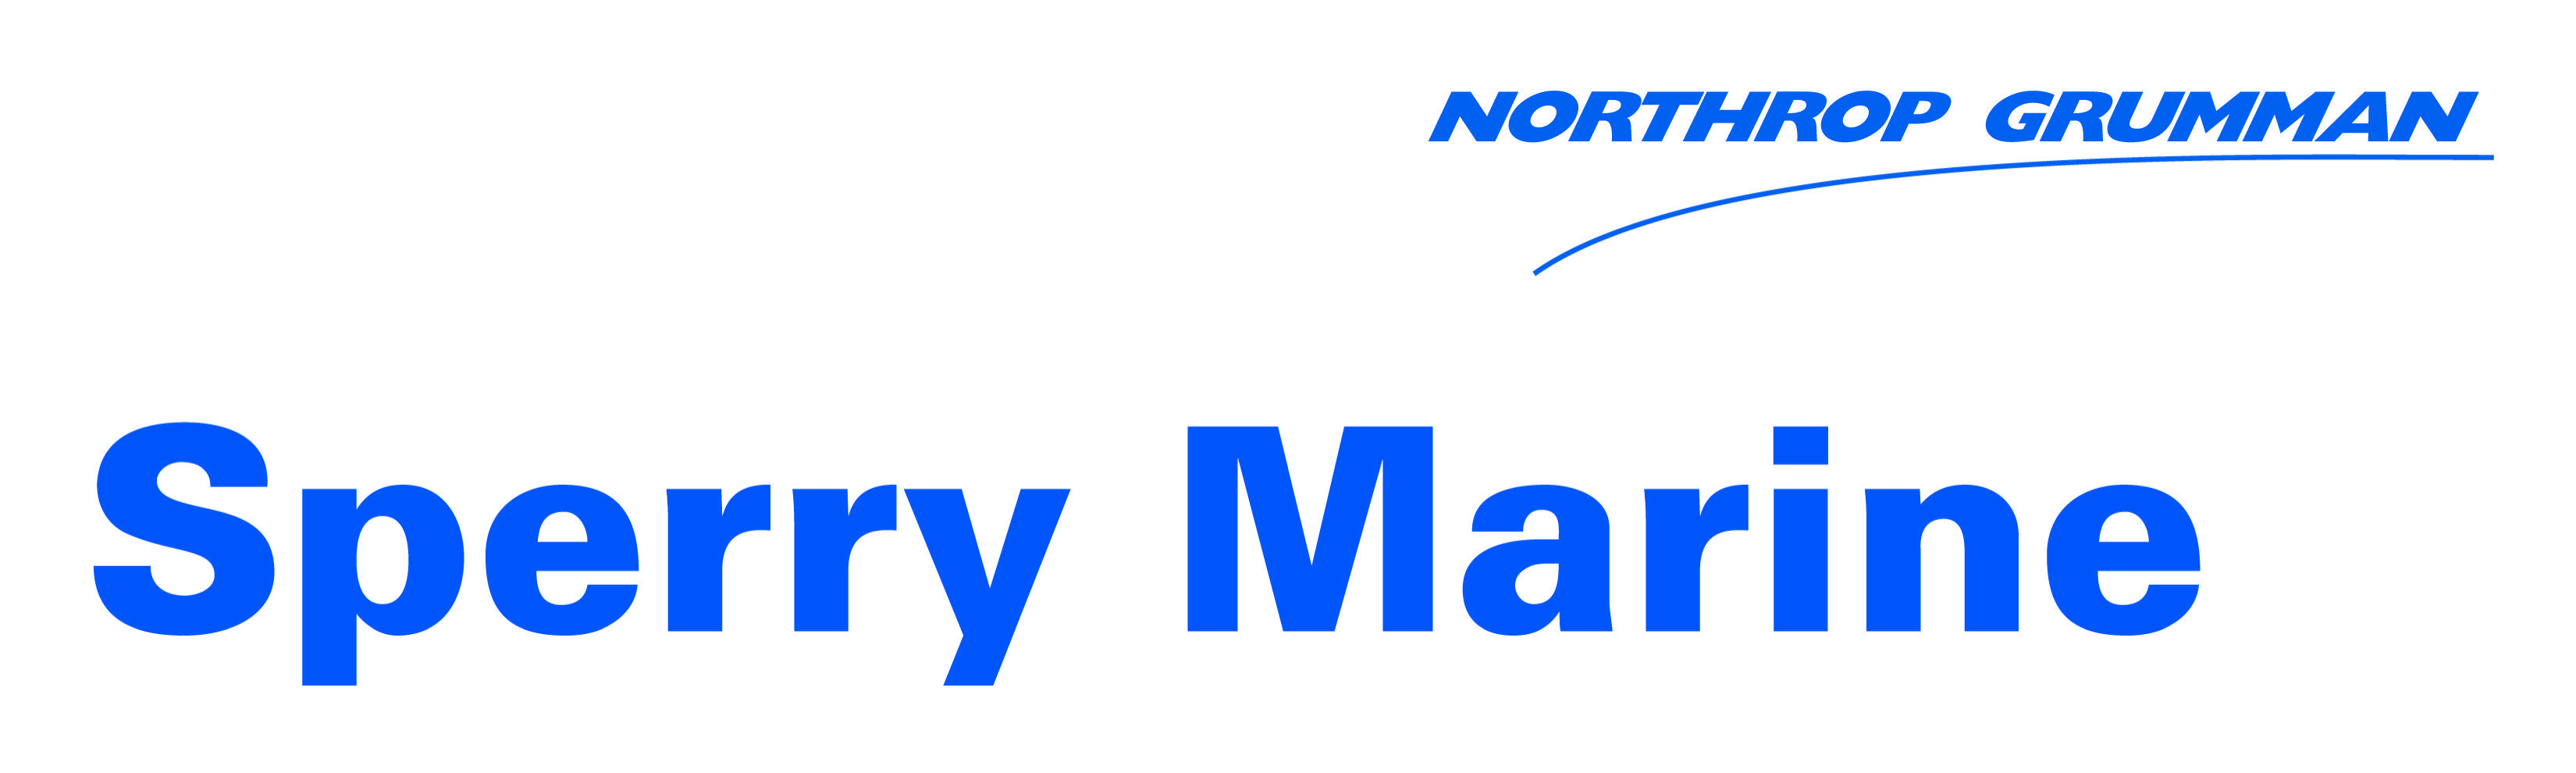 Grumman Logo - Northrop Grumman logo - BMT Mercury Technology